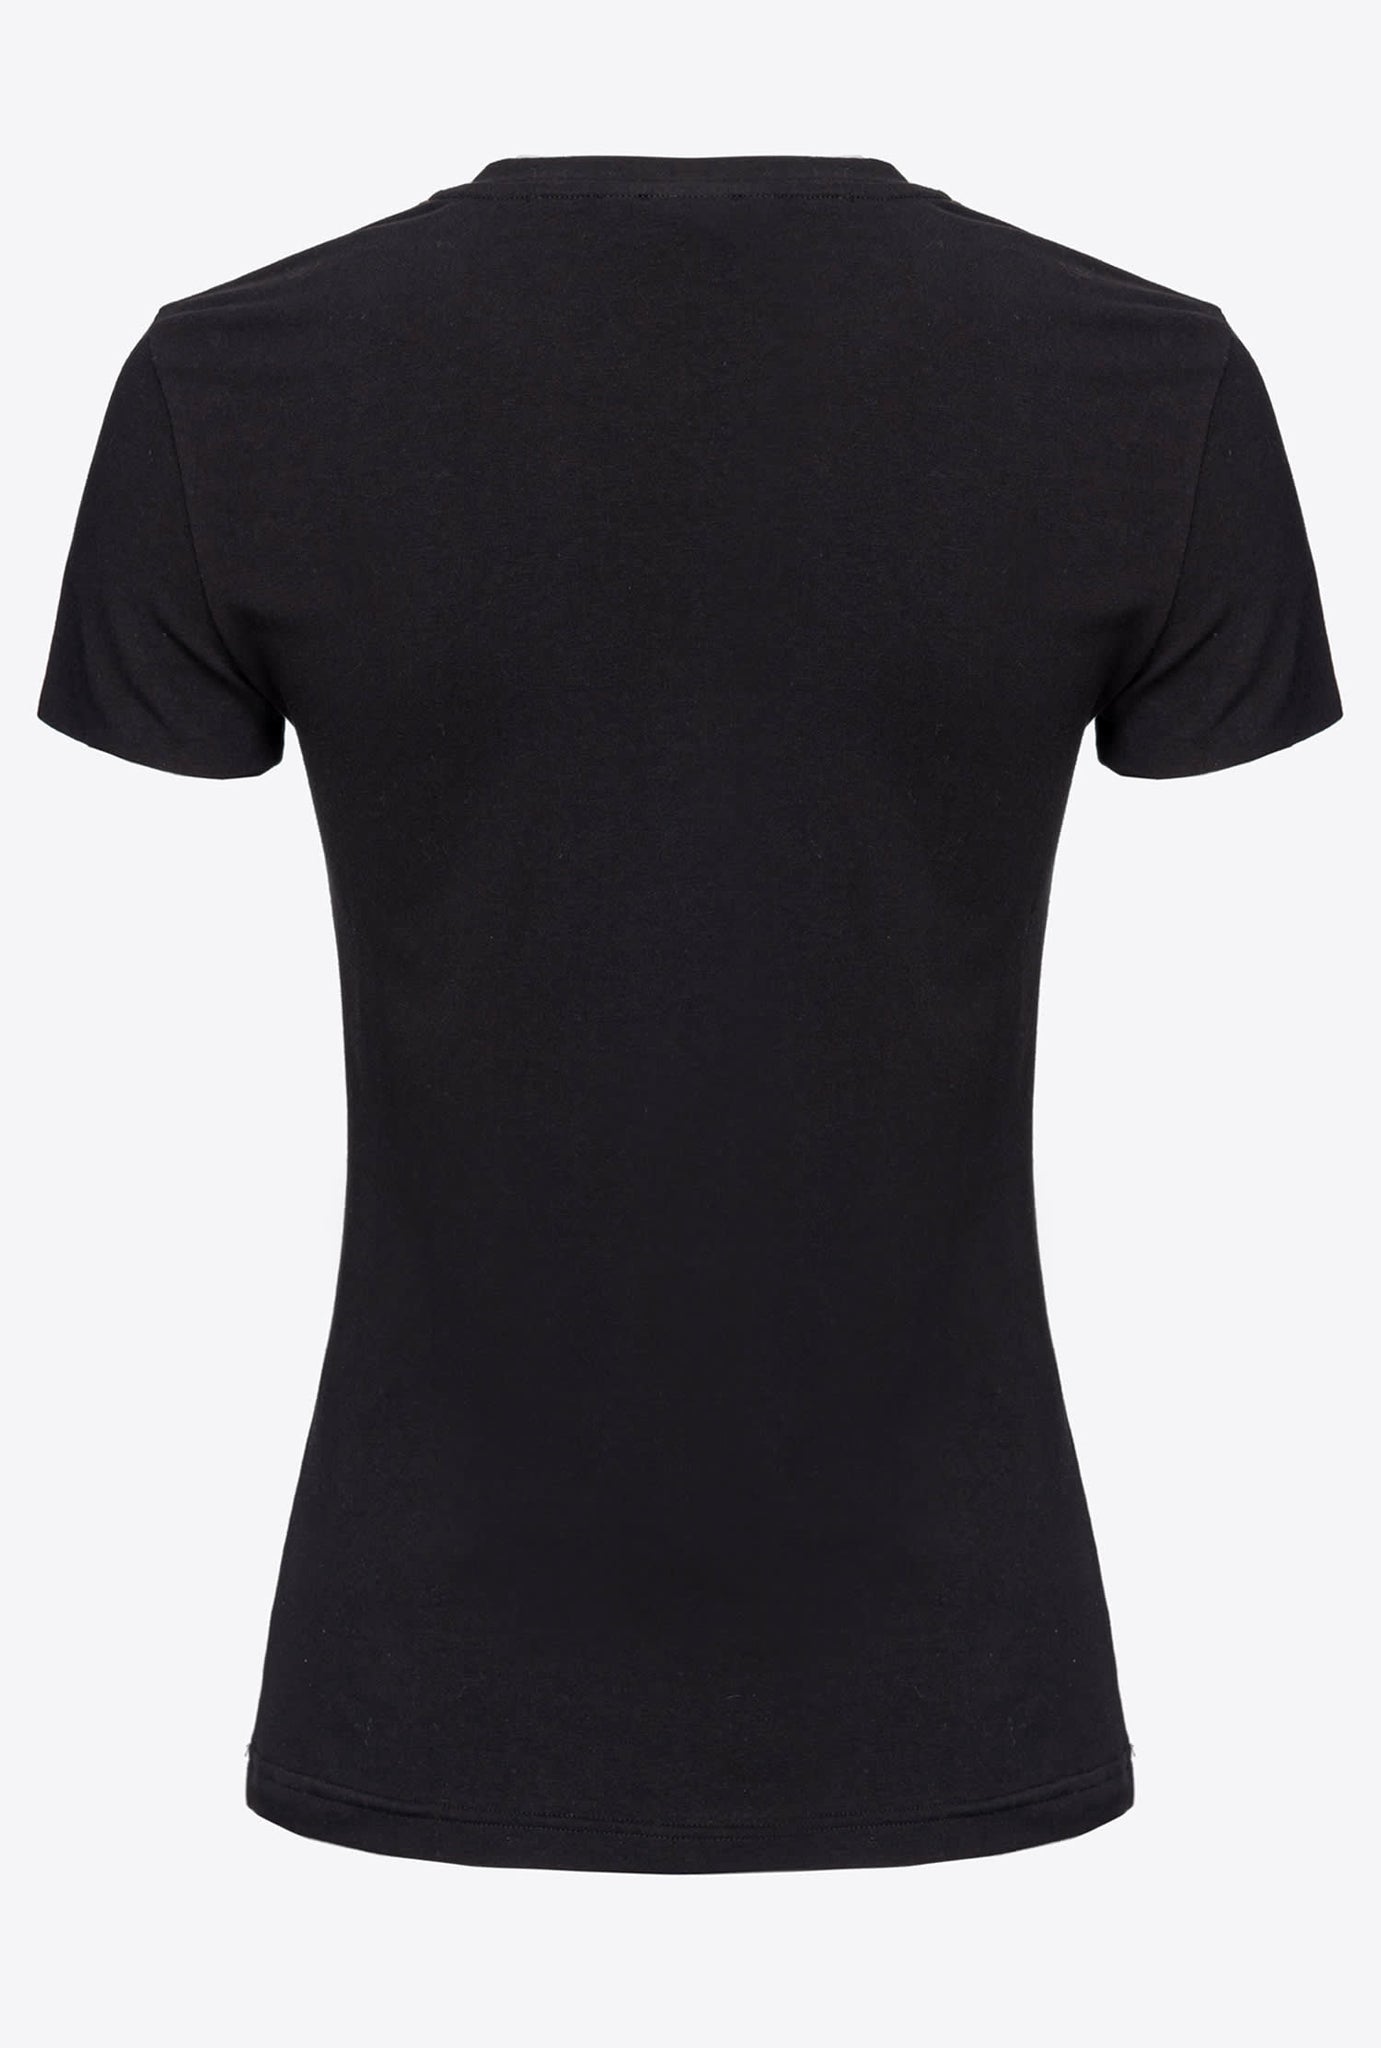 T-Shirt gioiello Pinko / Nero - Ideal Moda